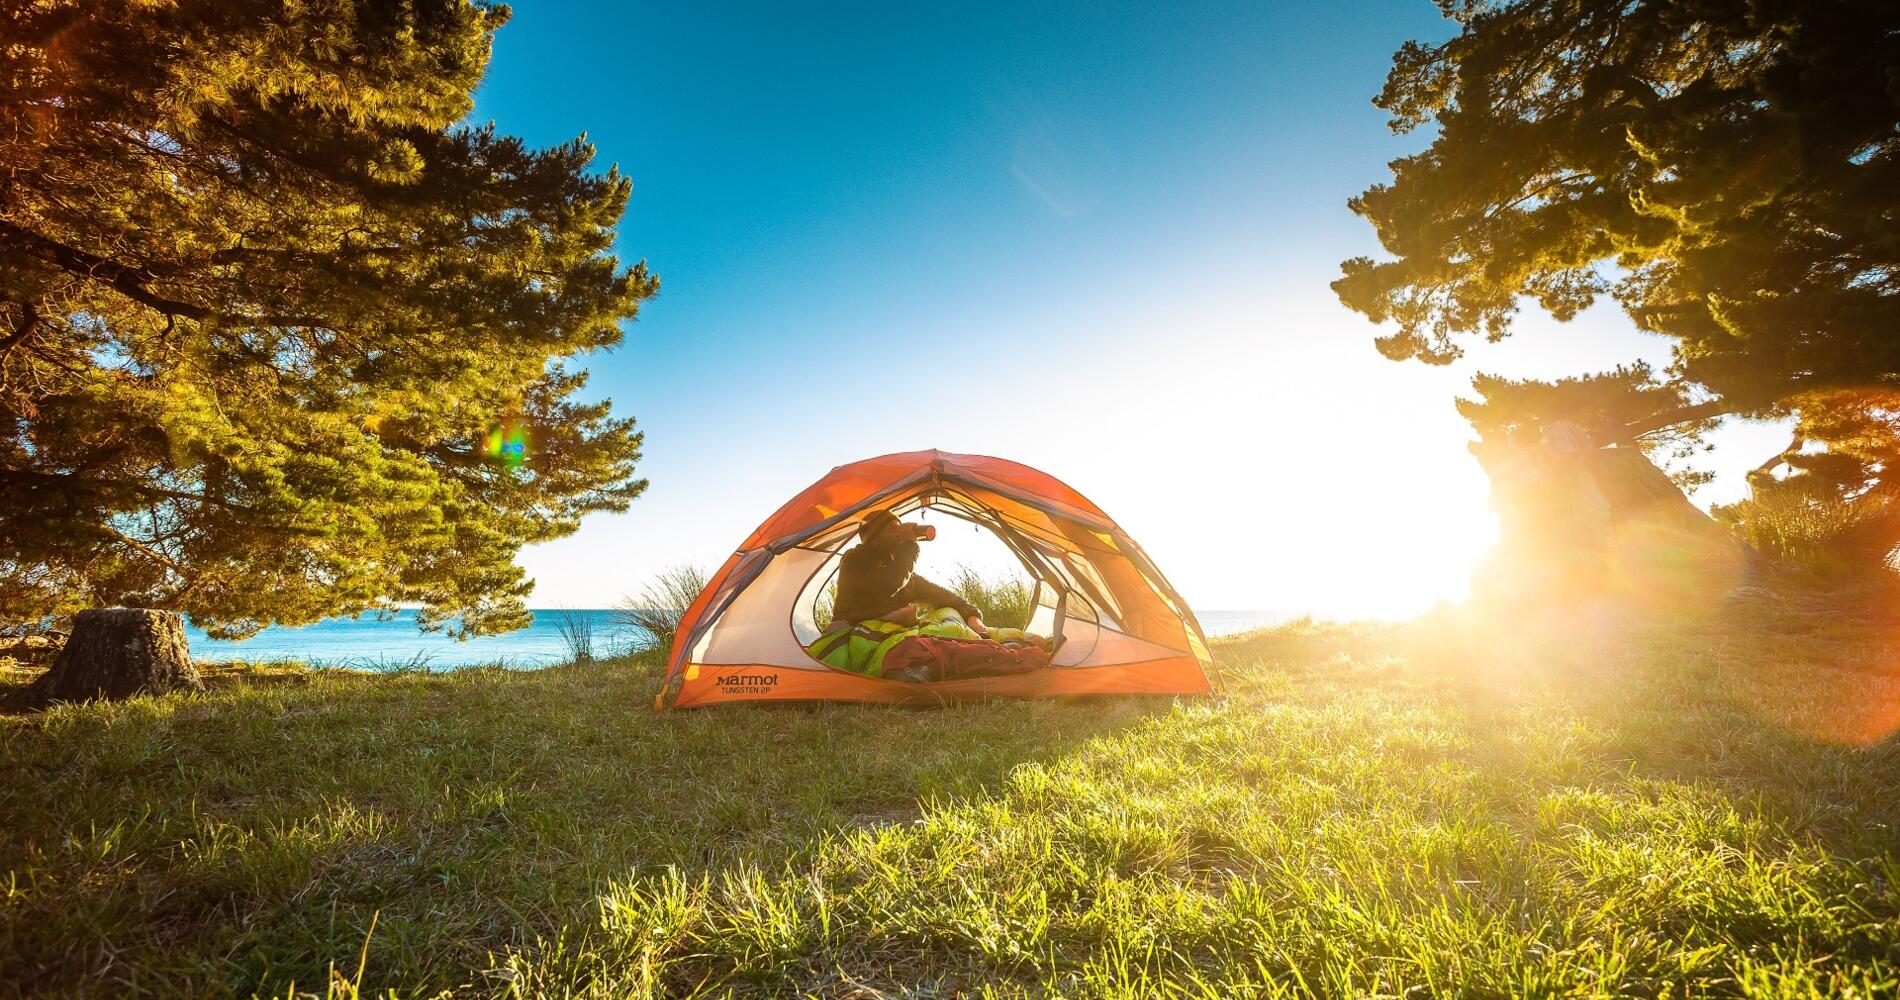 Http camping ru. Winter Camping. Шапка для фейсбука кемпинг. Обложка для ВК кемпинг природа. New Zealand Camping.